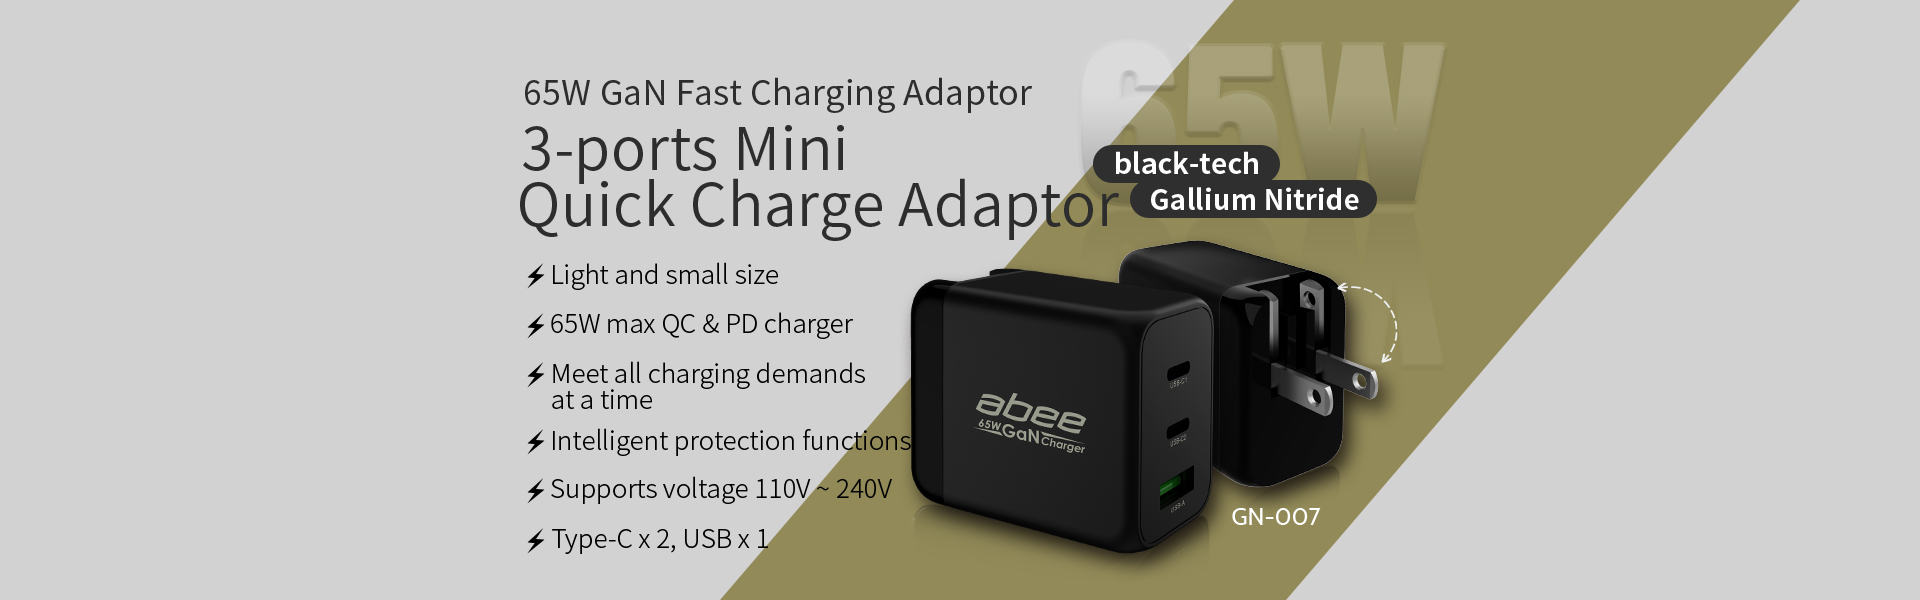 abee GN-007 65W GaN 3-ports Mini Quick Charge Adaptor